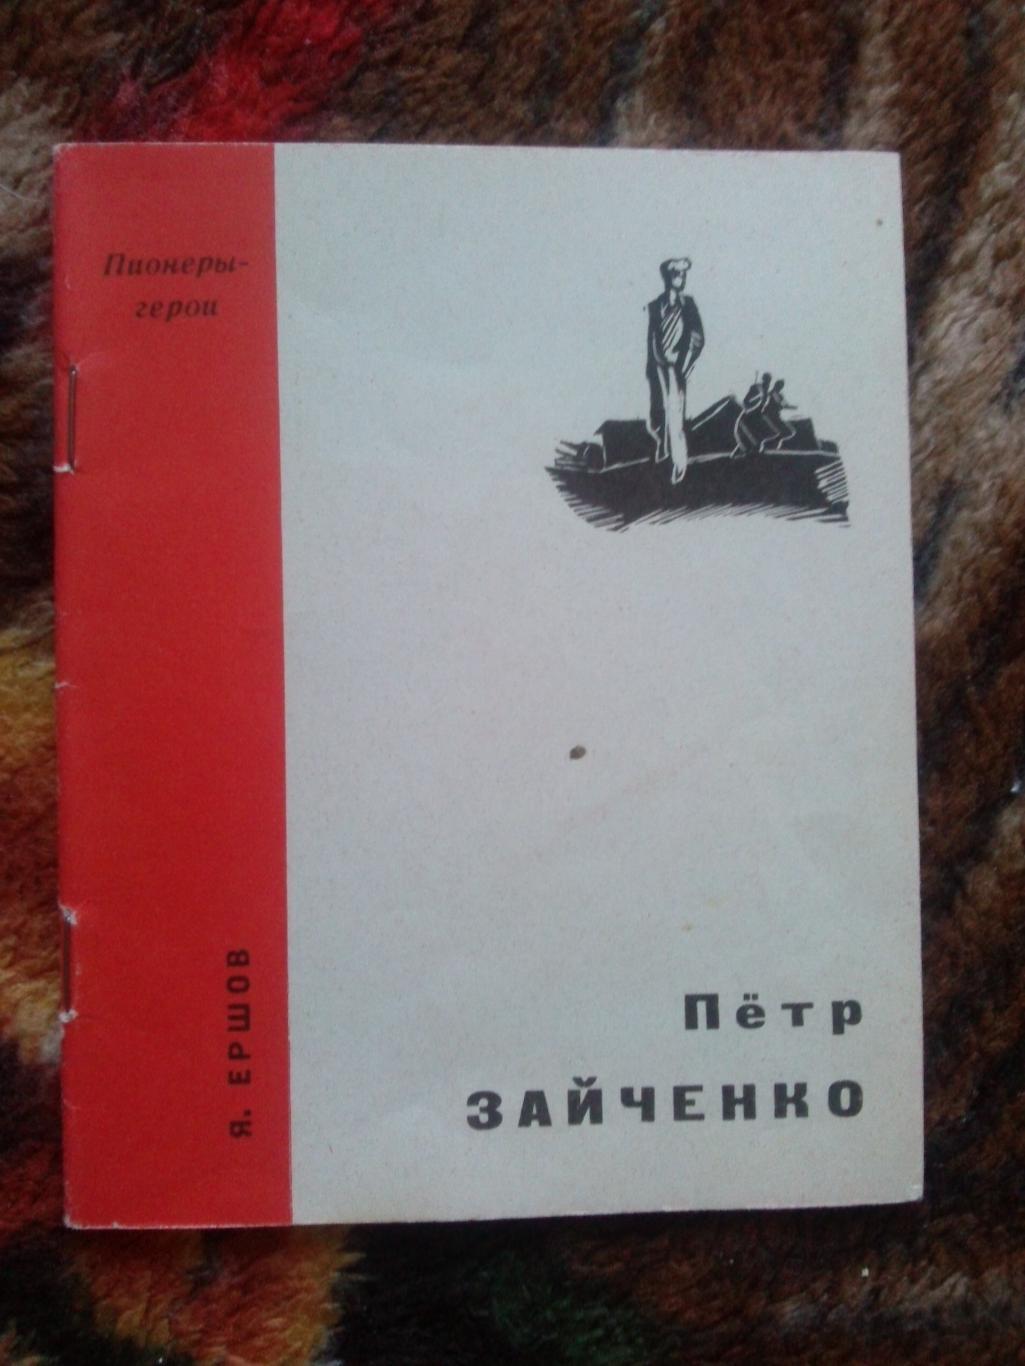 Пионеры-герои (Плакат + брошюра) 1967 г. Пётр Зайченко (Пионер , агитация) 3